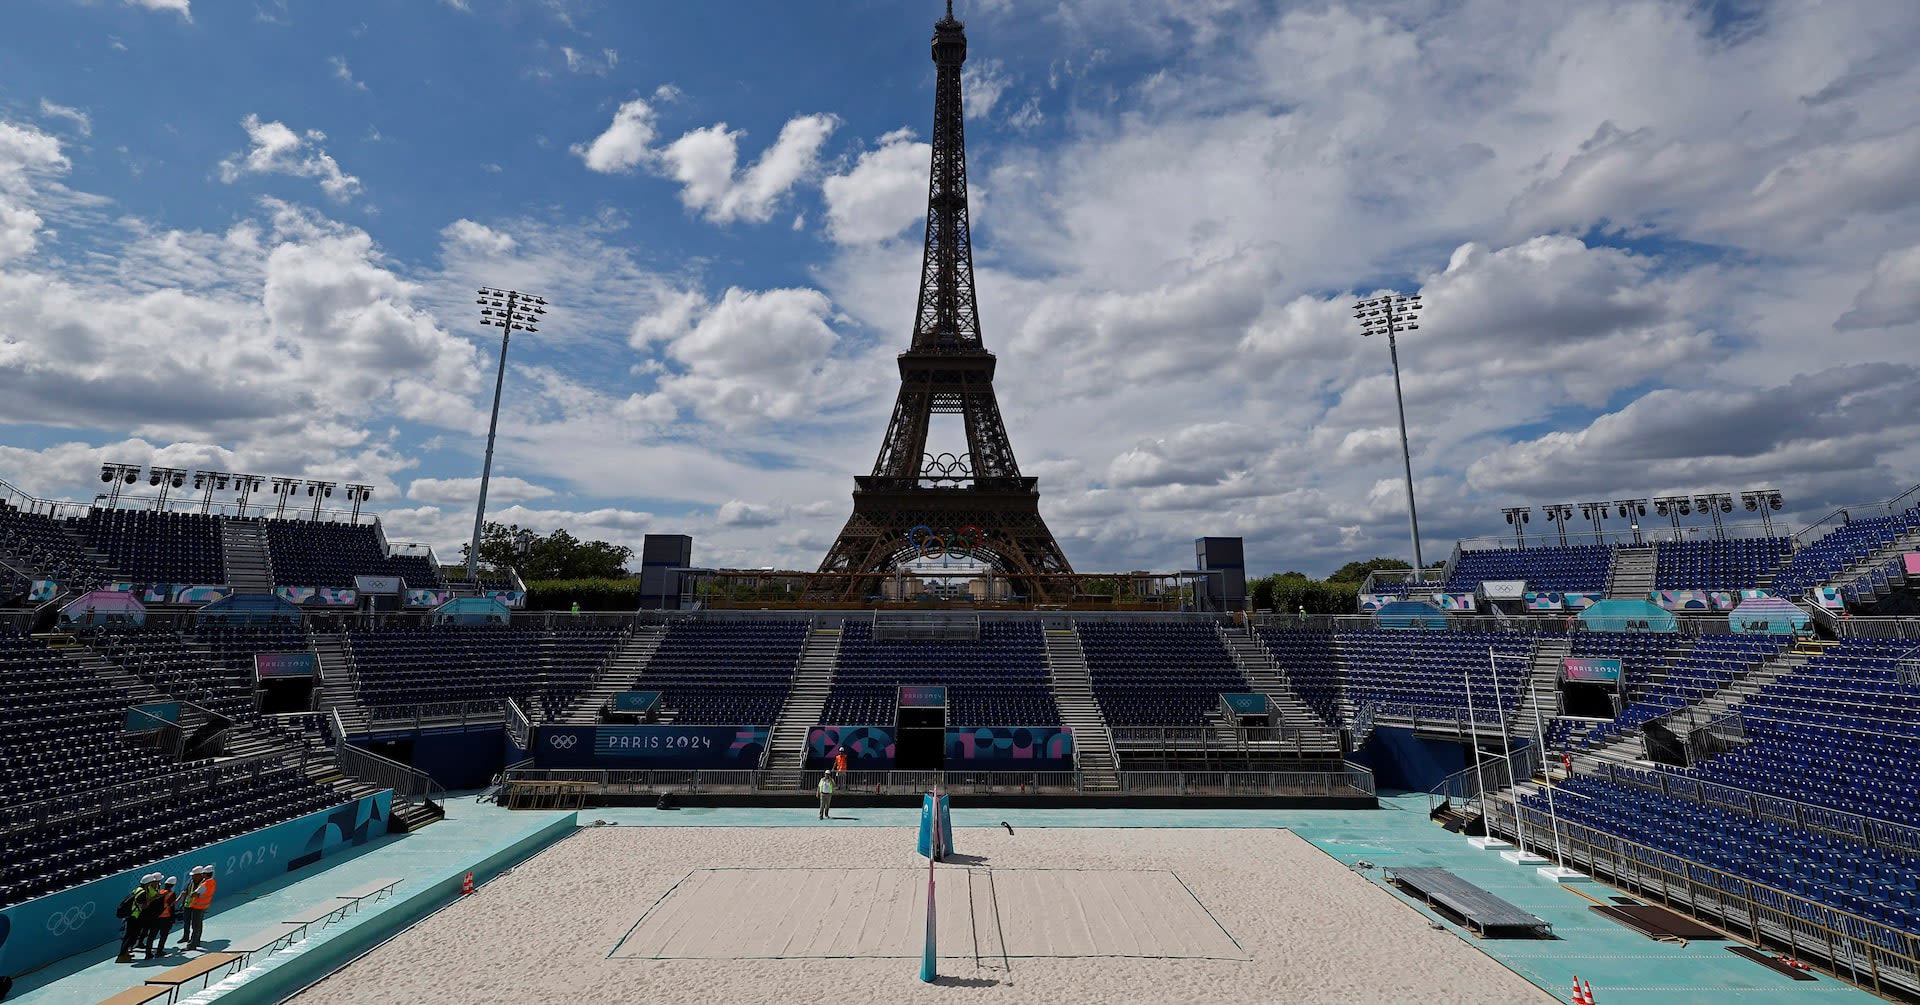 Paris Olympics: 2024 Games take over city landmarks as venues